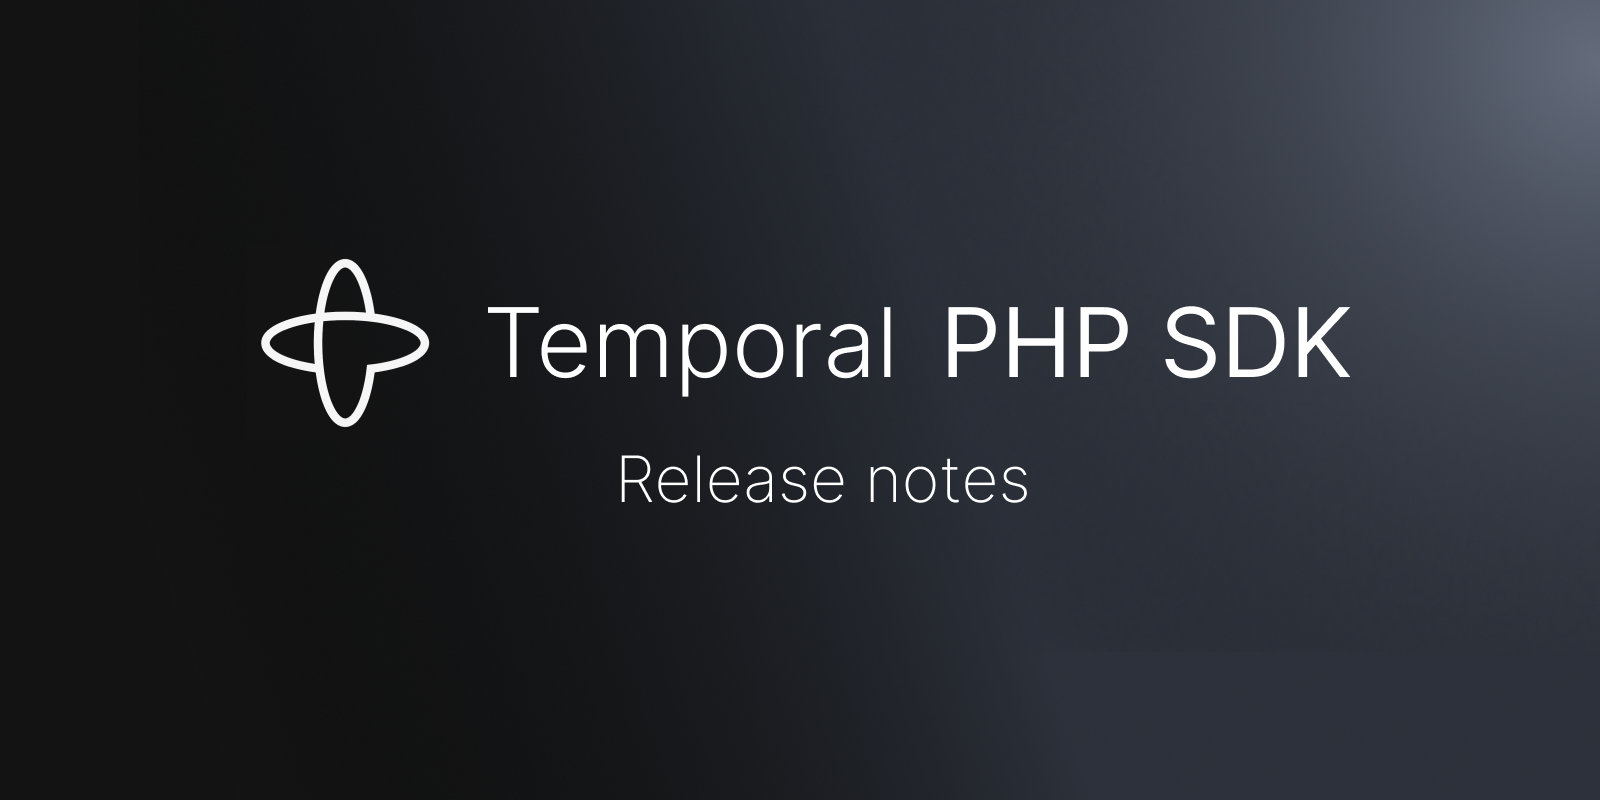 Temporal PHP SDK 2.6.0